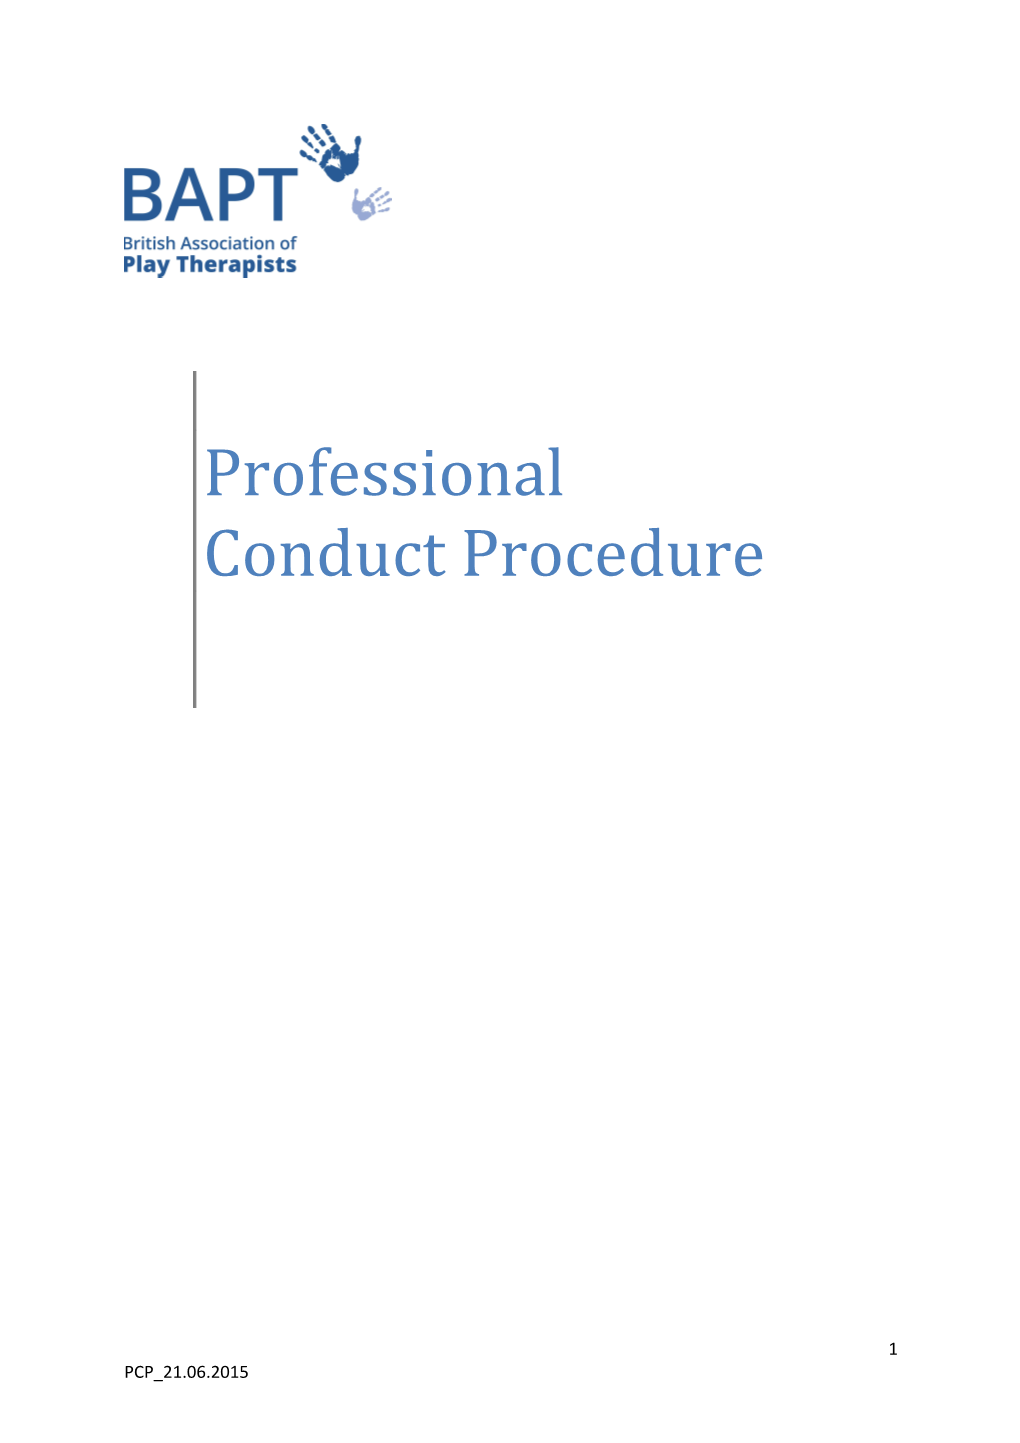 Bapt Professional Conduct Procedure 2014